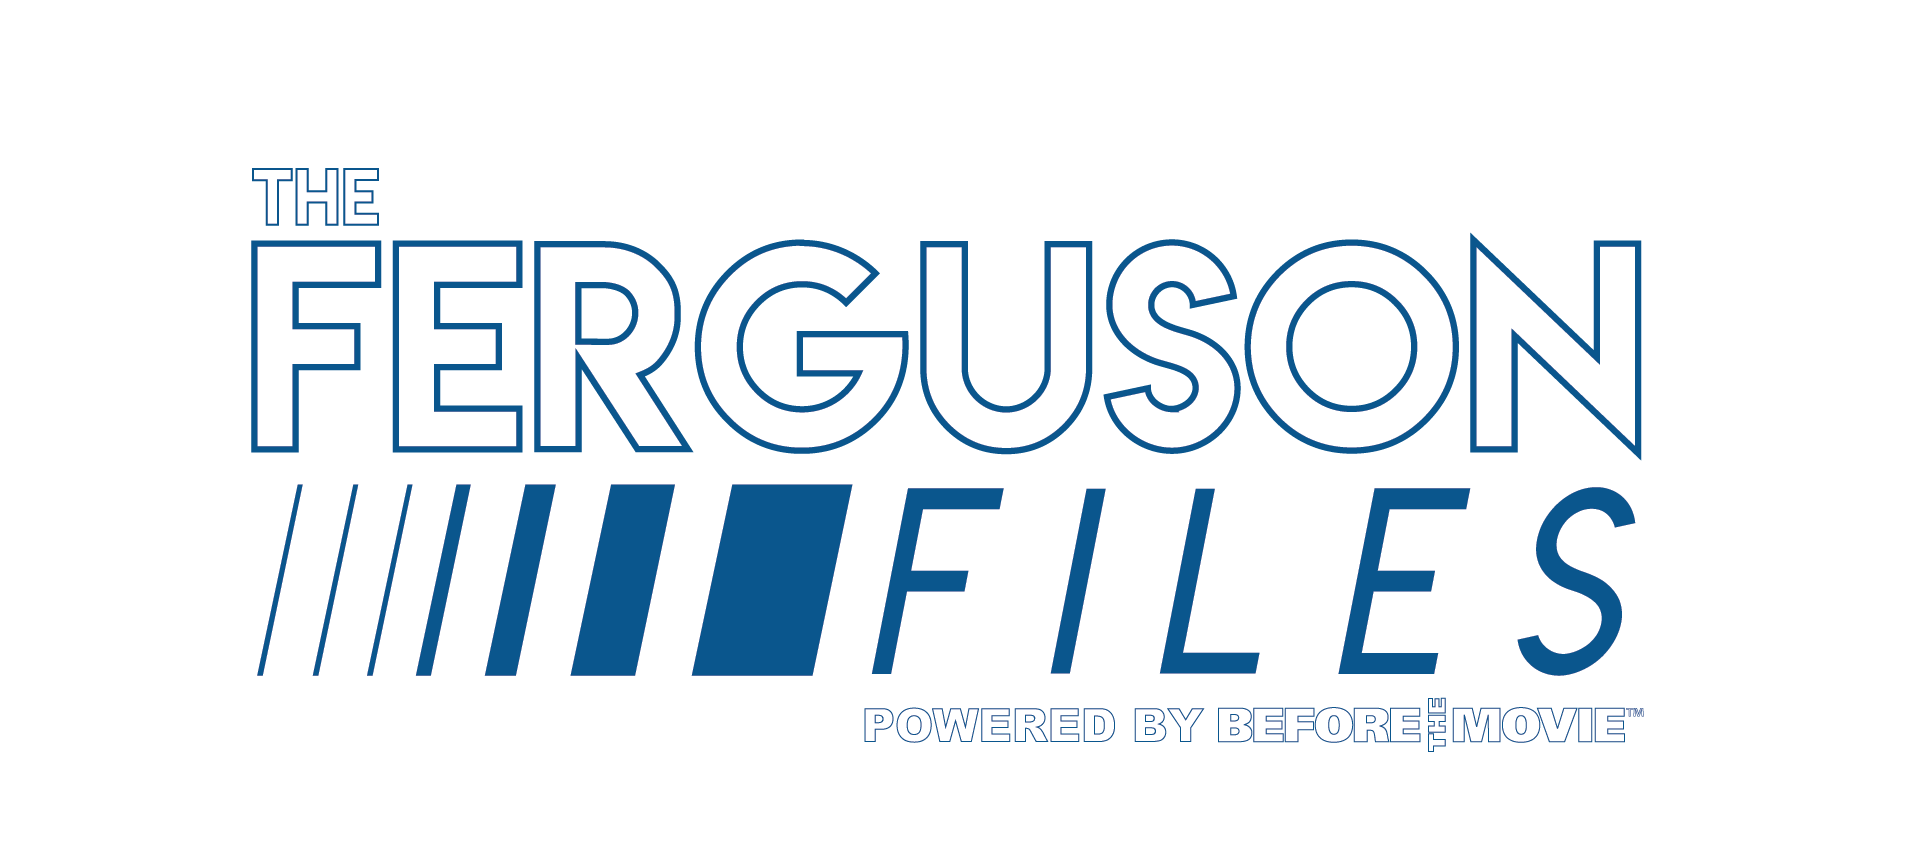 Ferguson Files